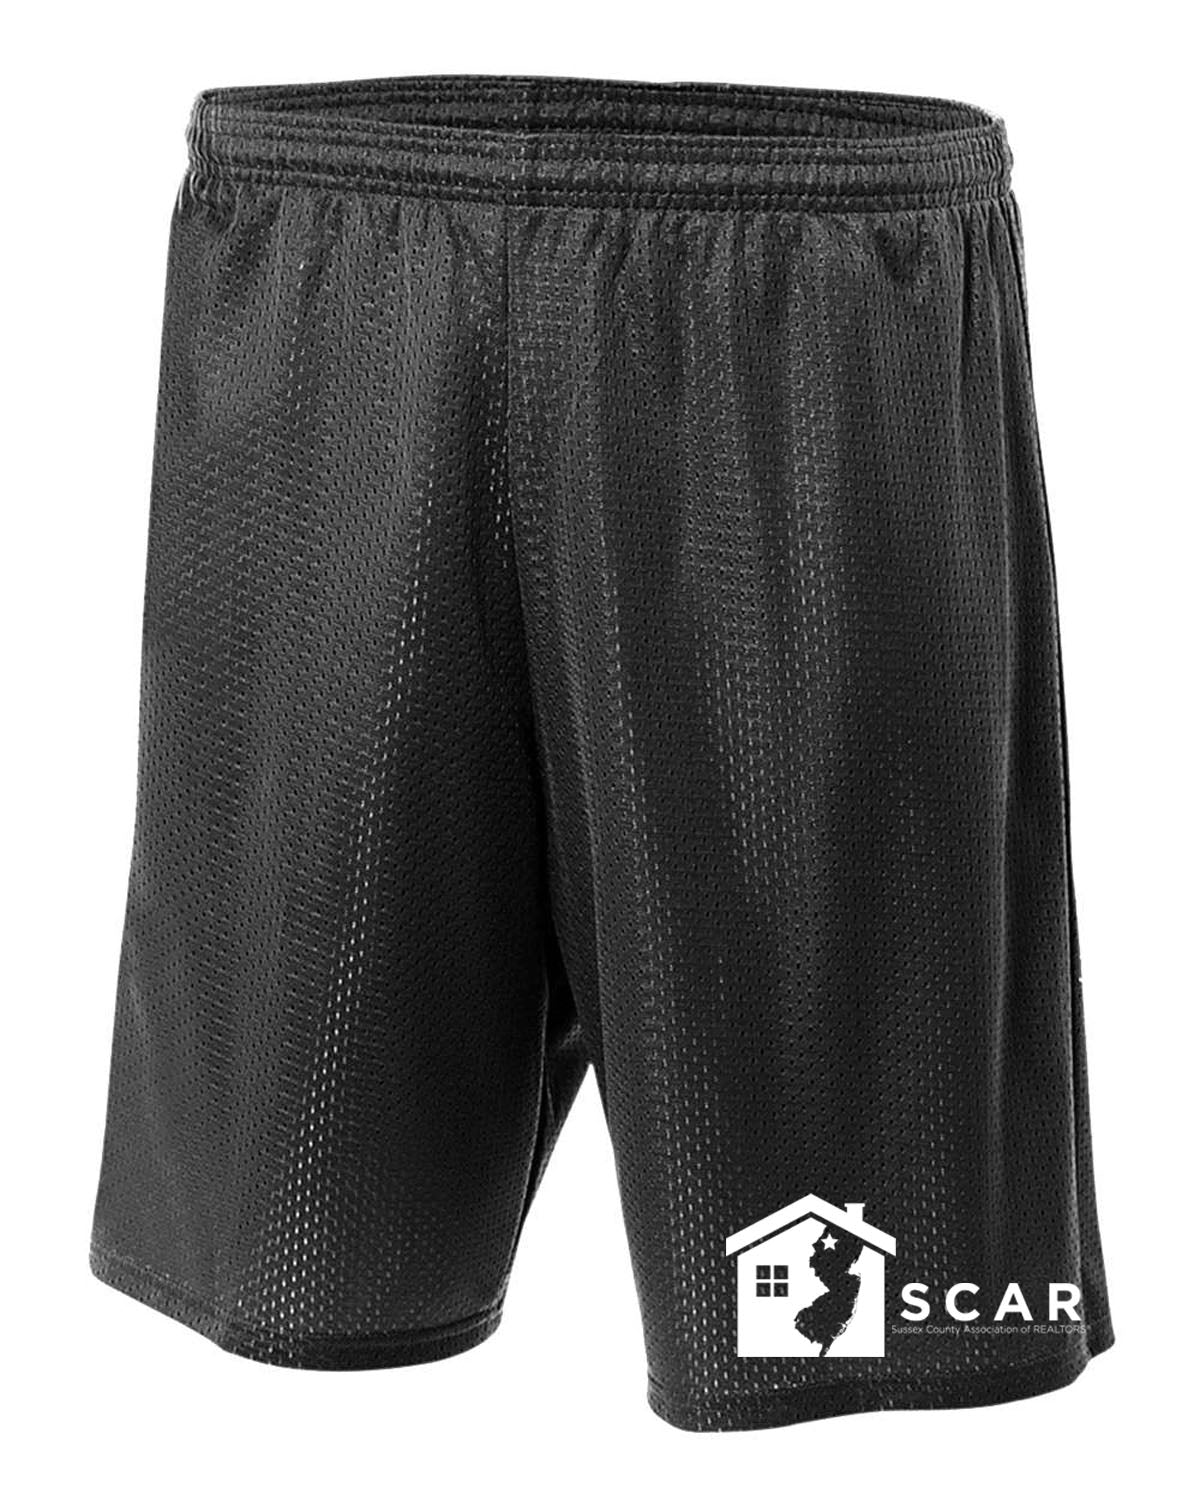 SCAR Mesh Shorts Design 2